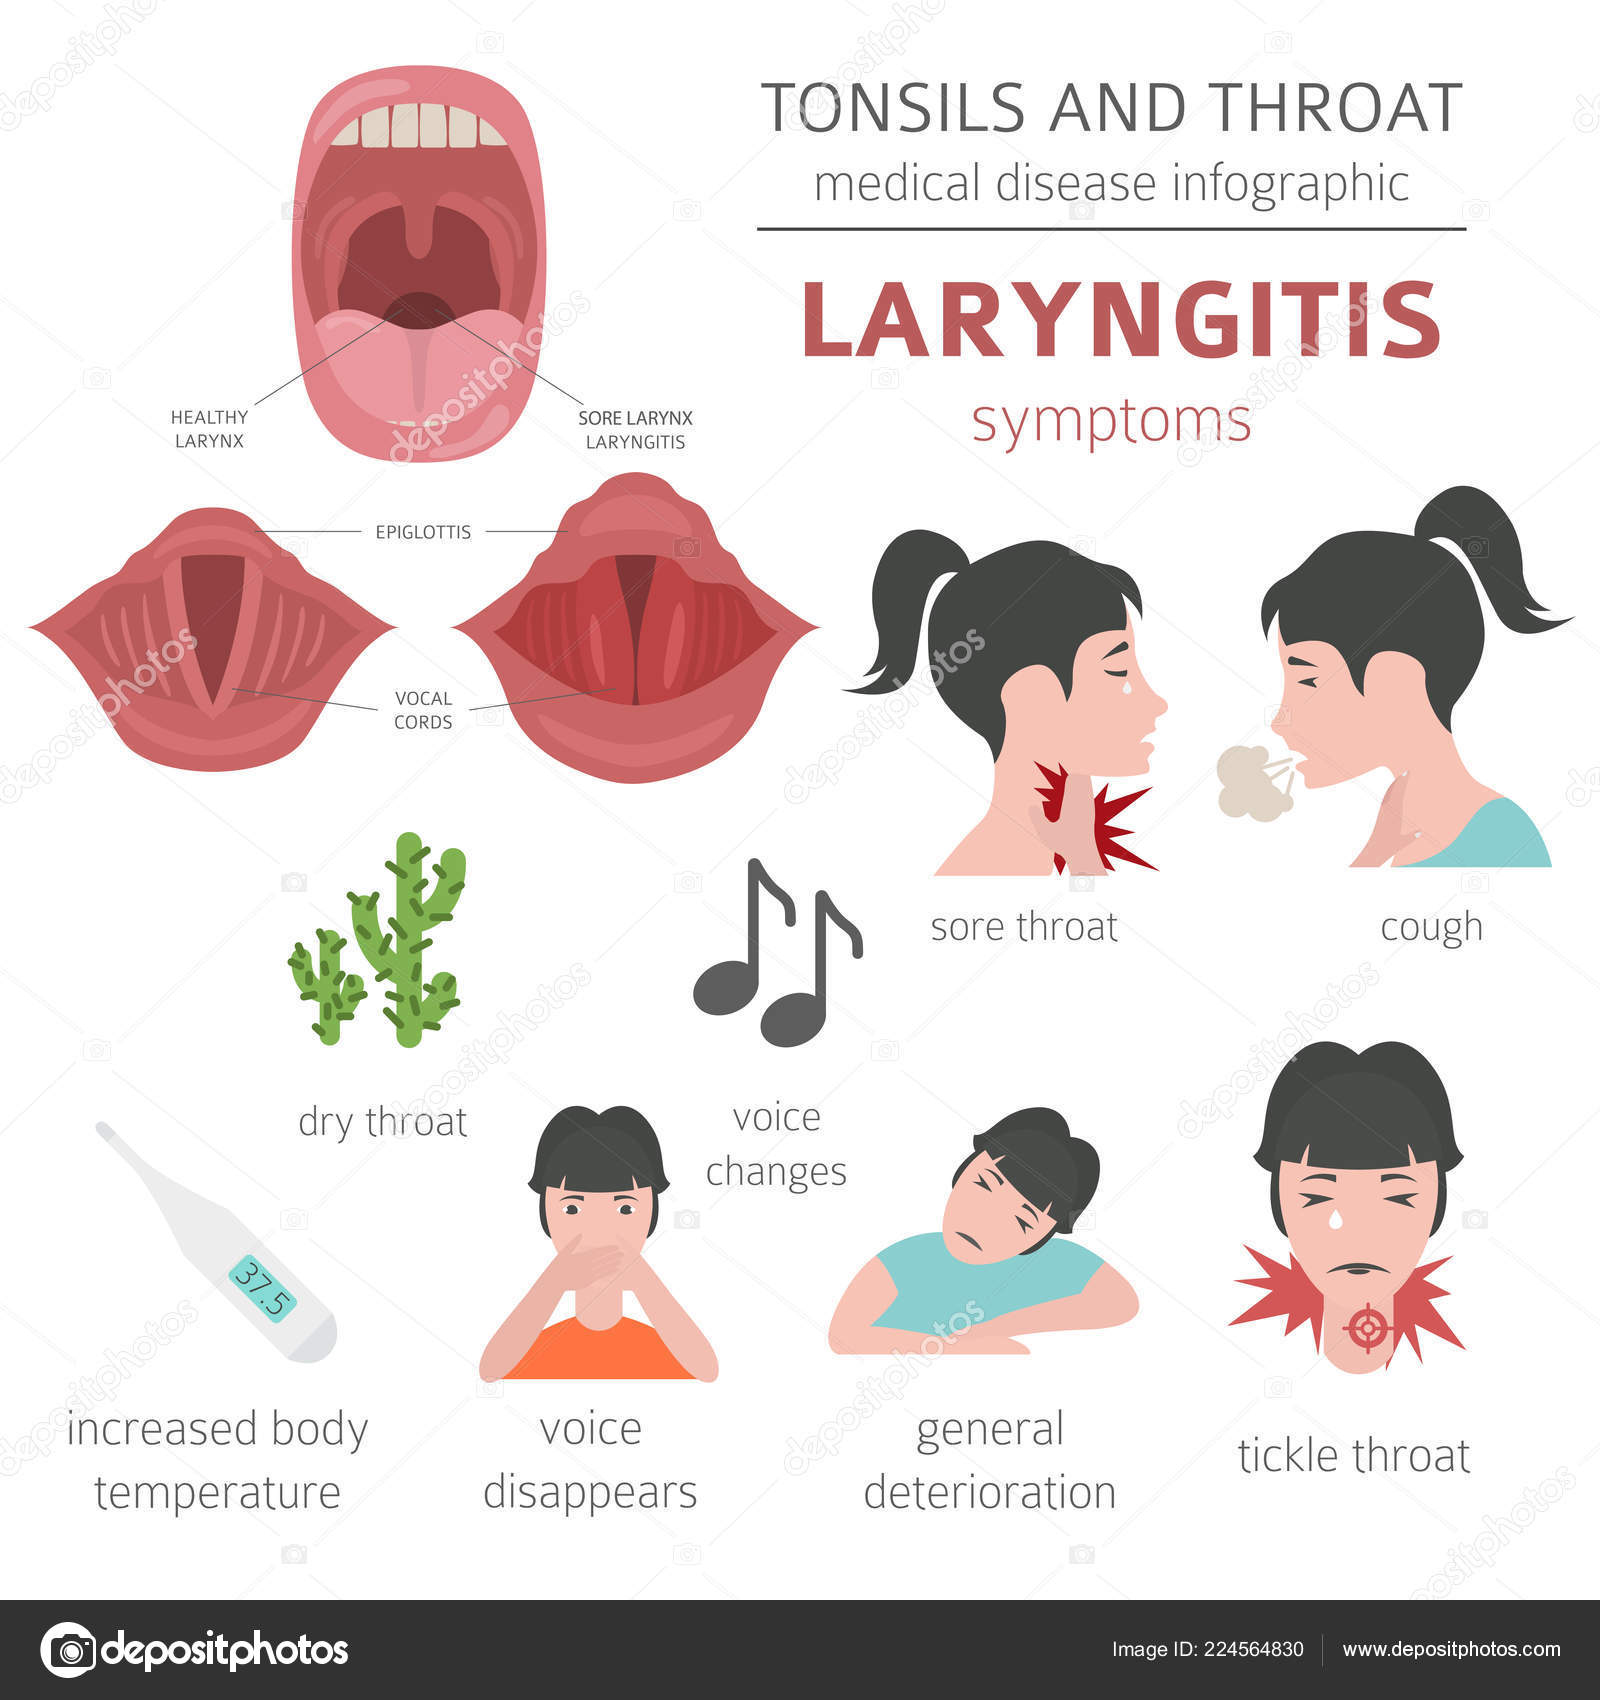 Tonsils Throat Diseases Laryngitis Symptoms Treatment Icon Set Medical